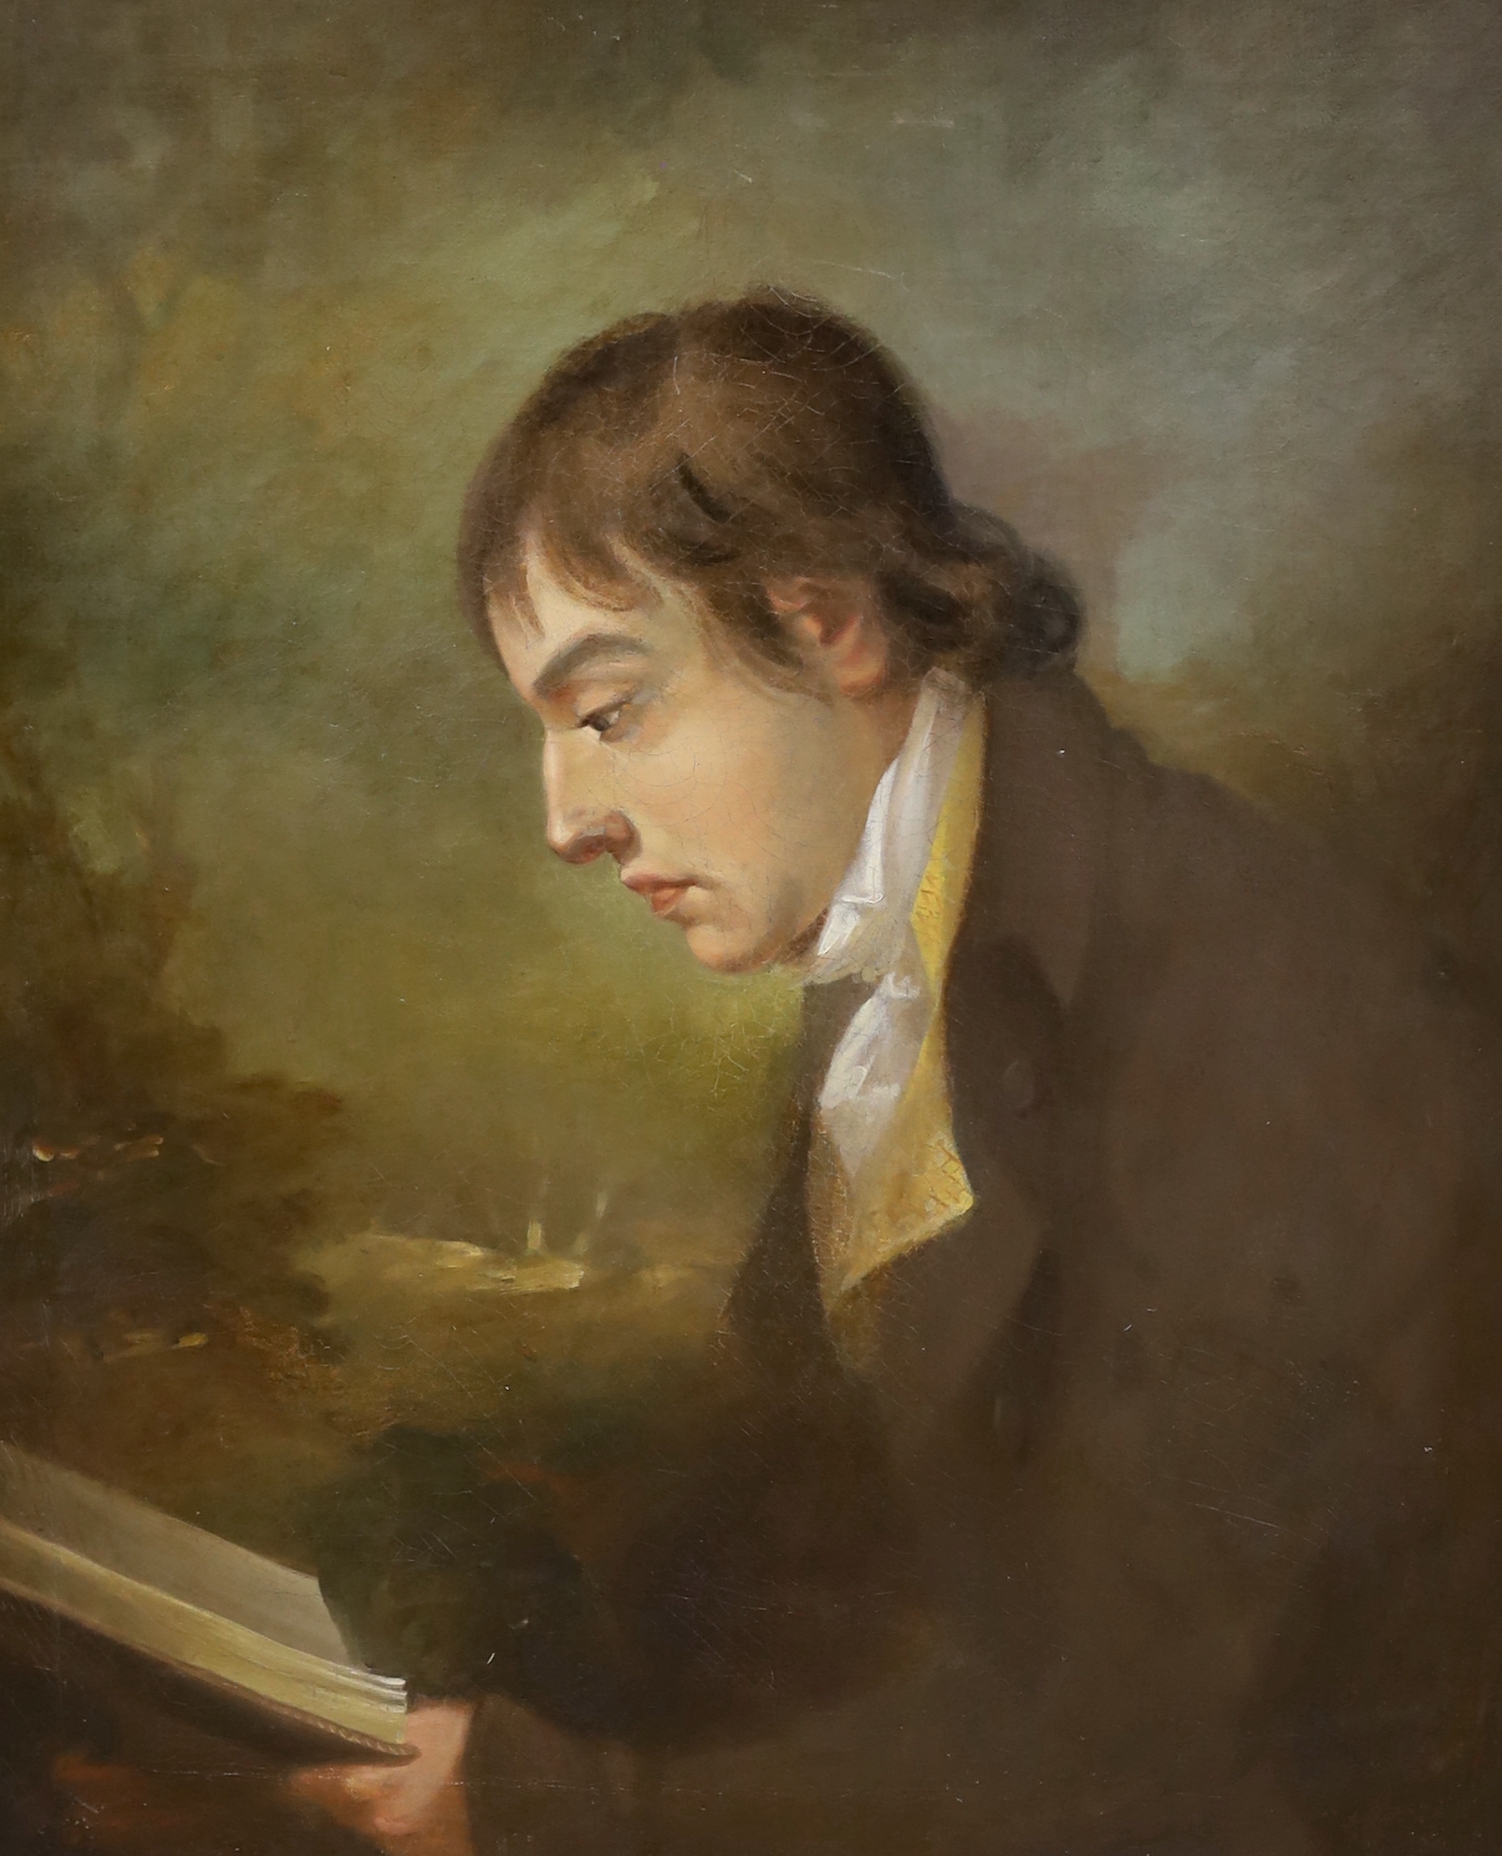 19th century English School, Portrait of the poet John Keats reading before a landscape (1795-1821), 75 x 62cm, ornate gilt frame